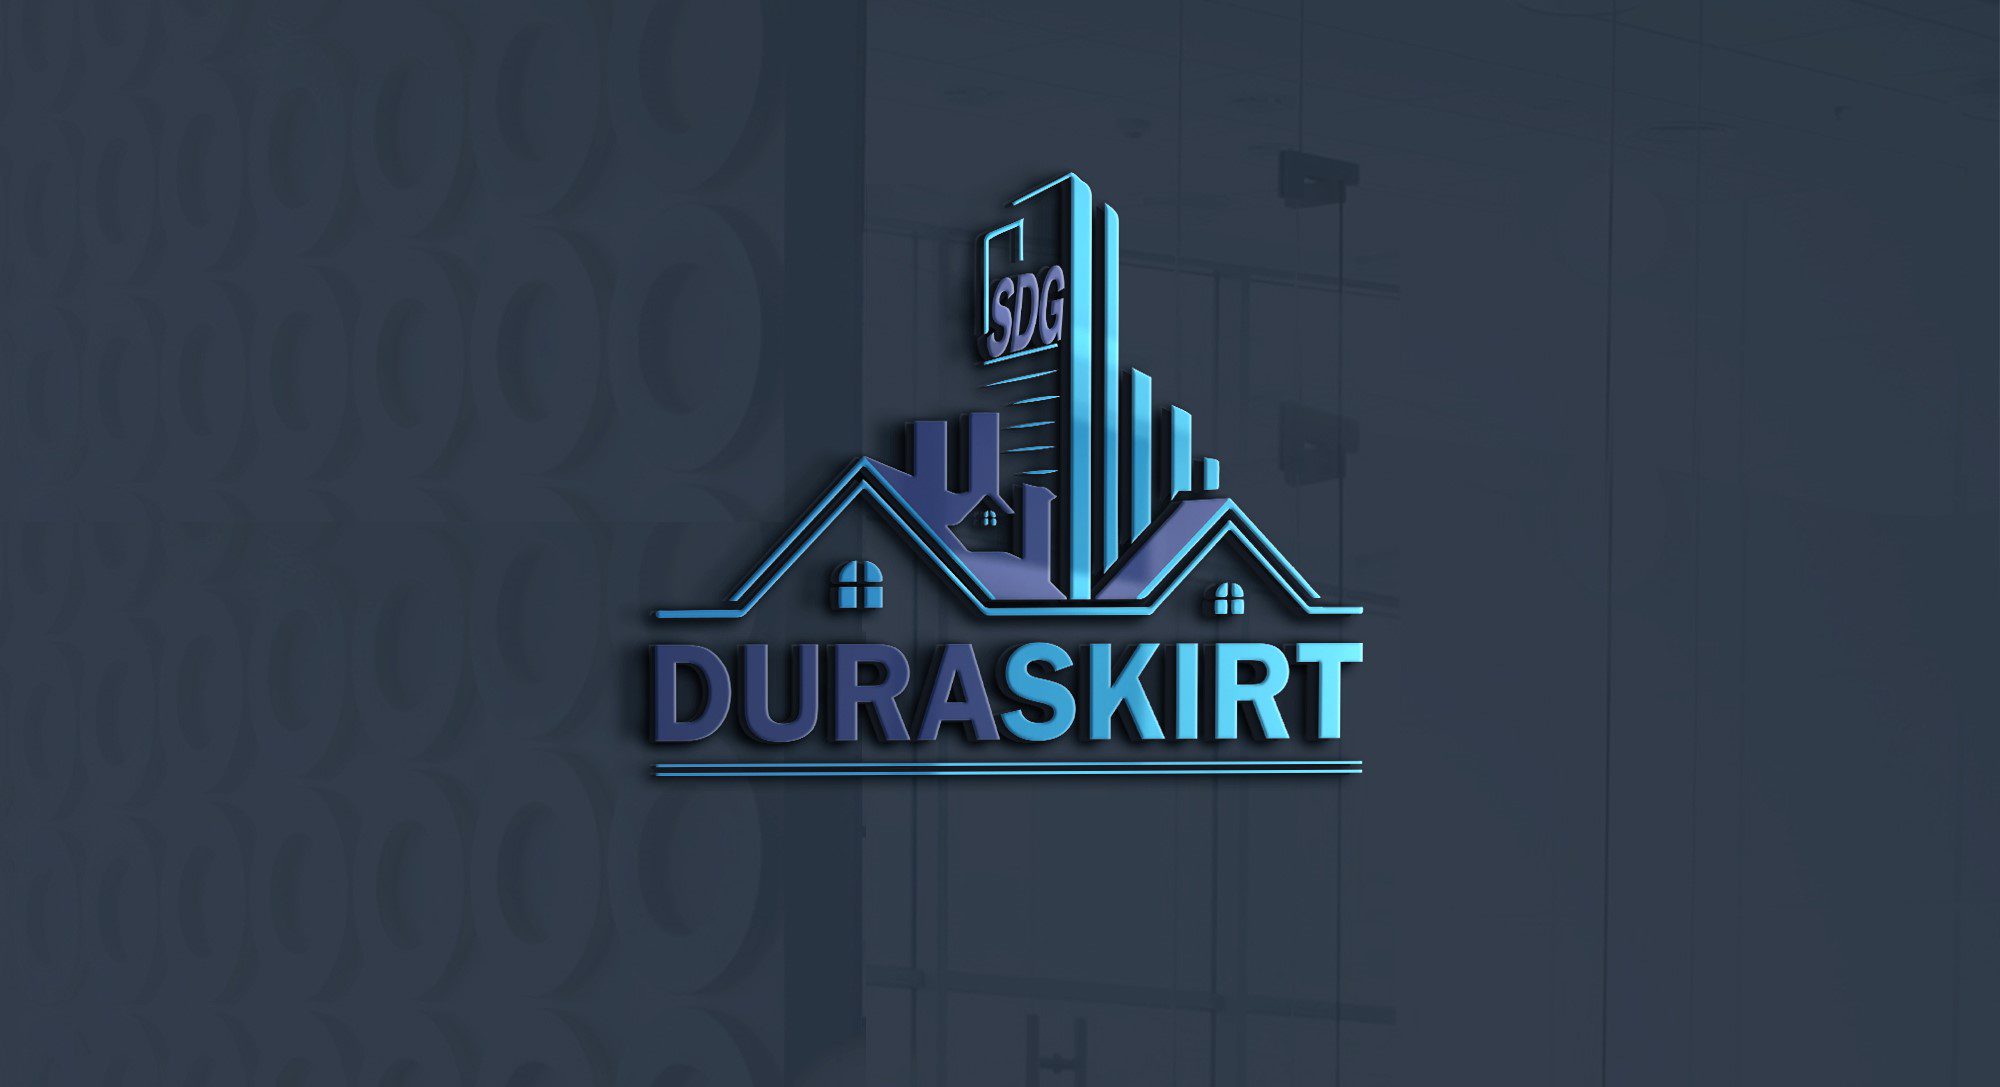 DURASKIRT Company Logo